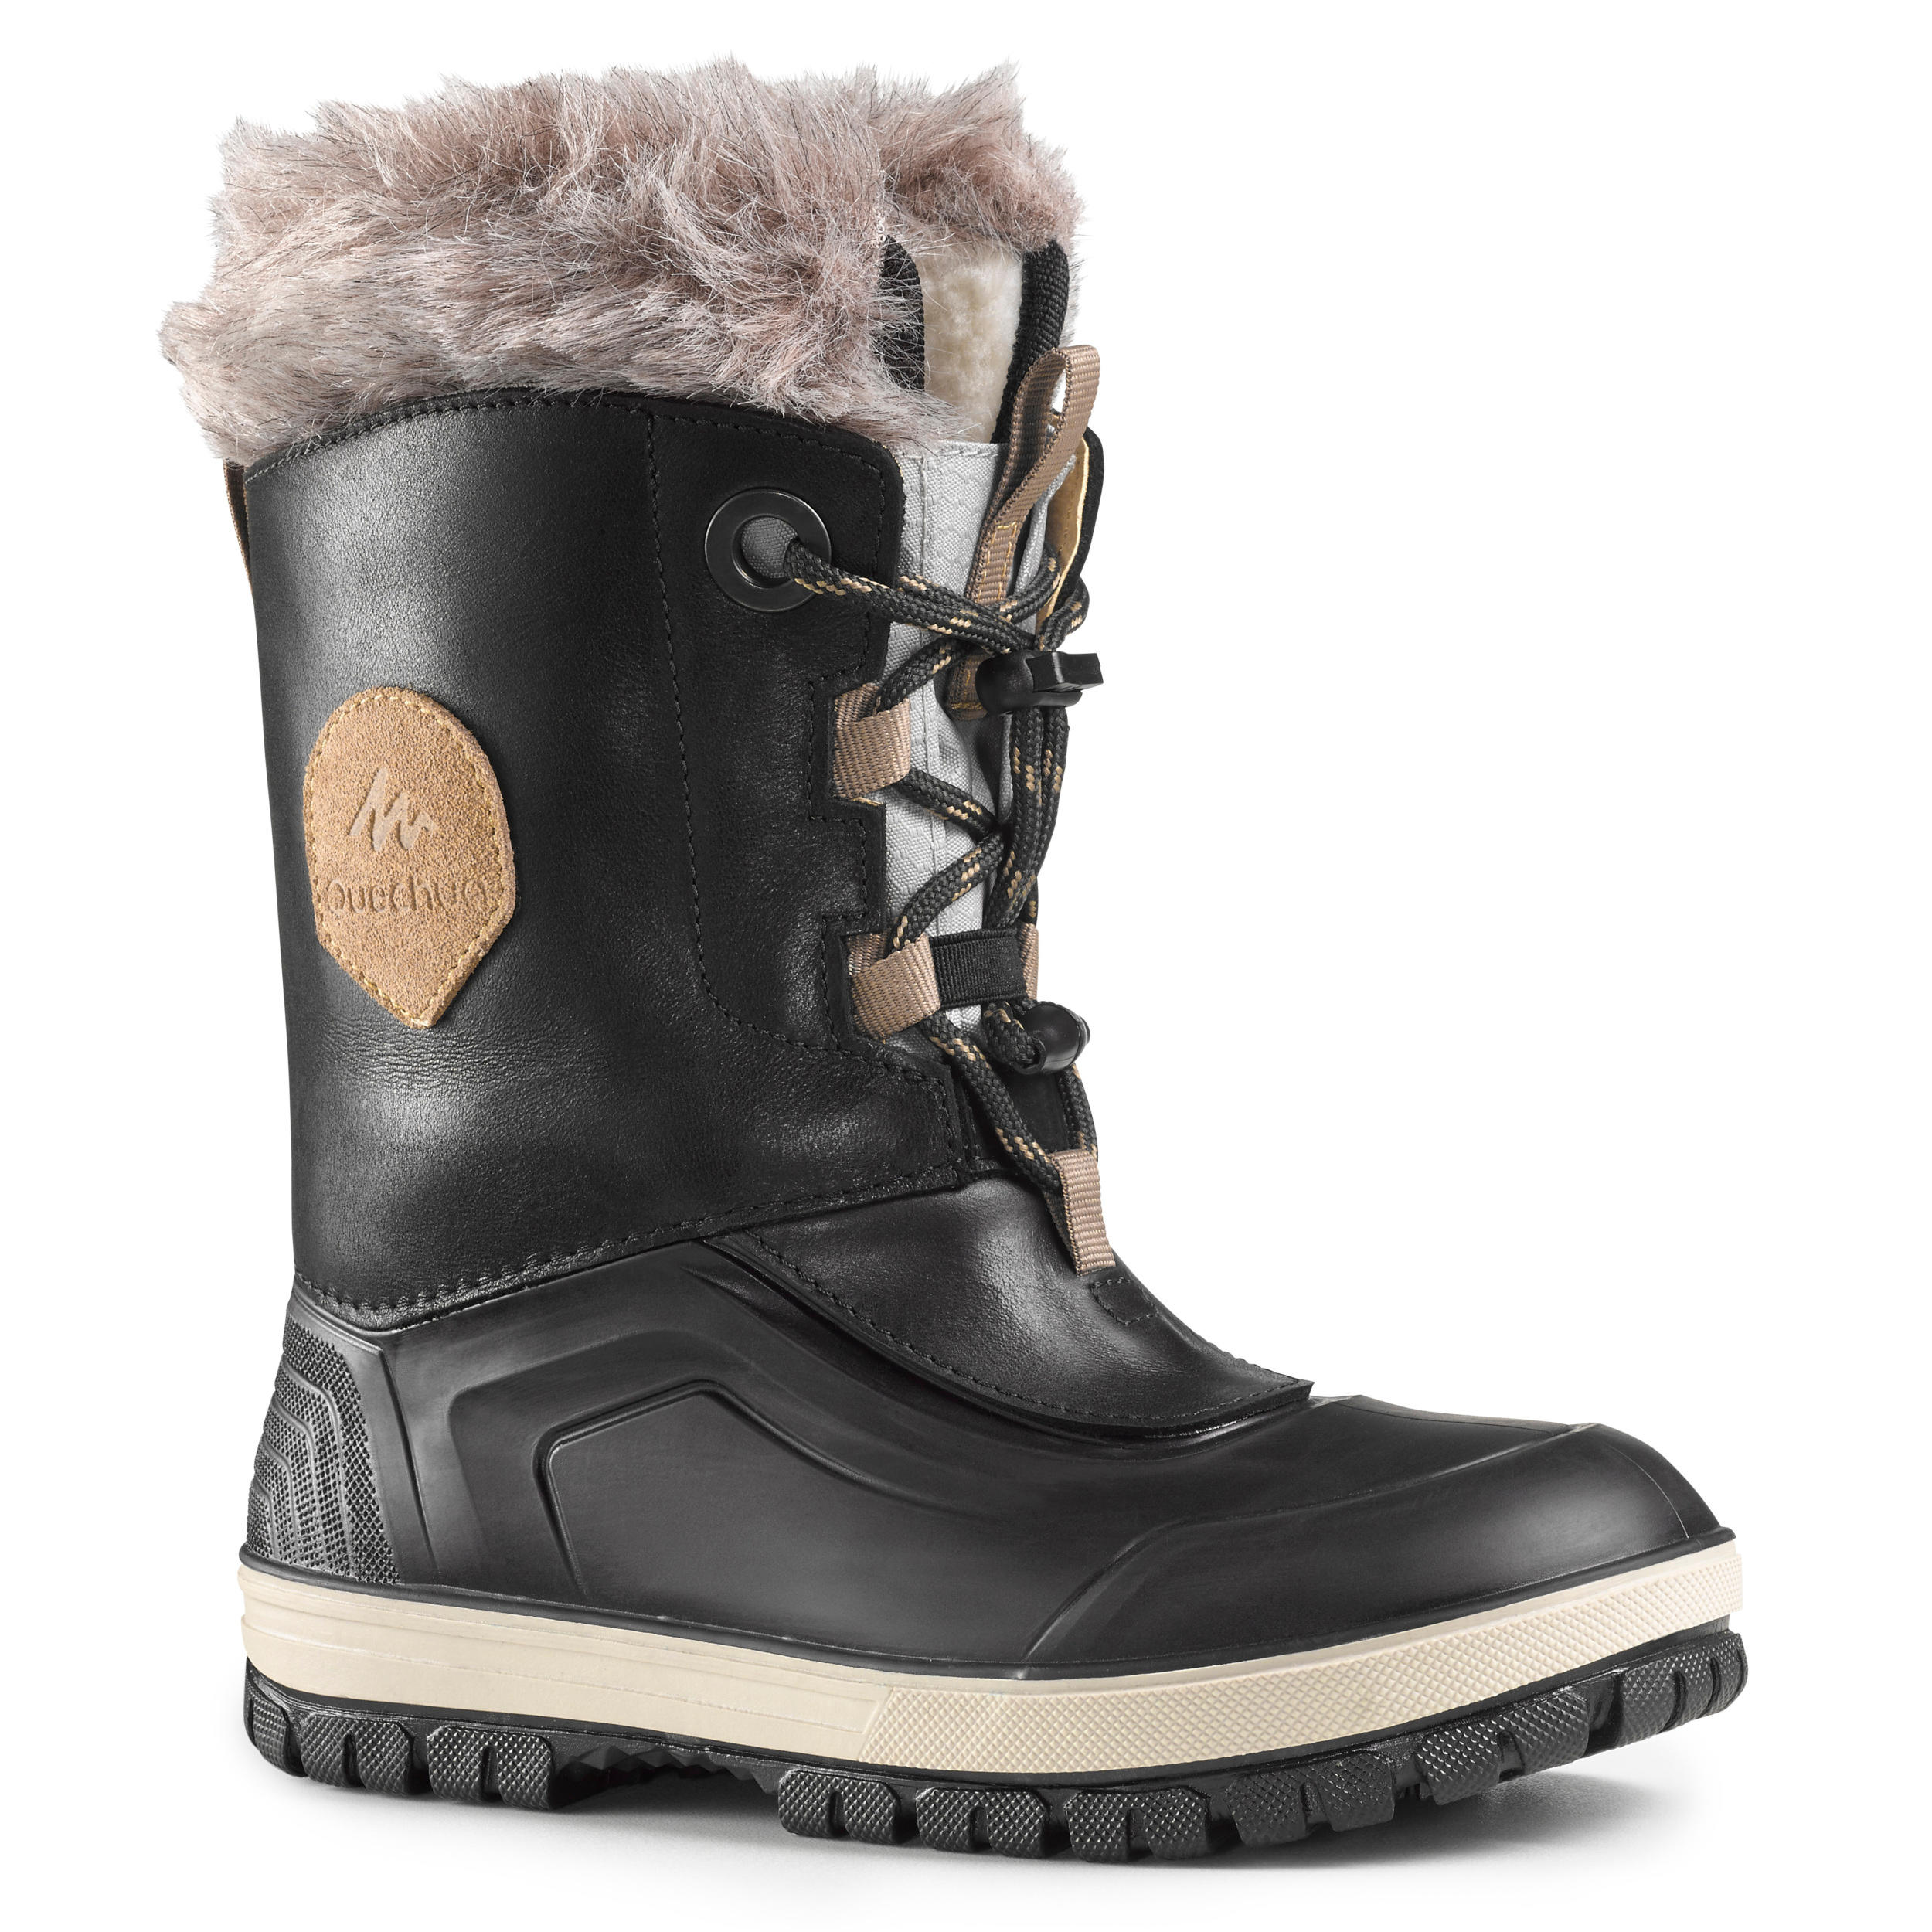 warm winter hiking boots